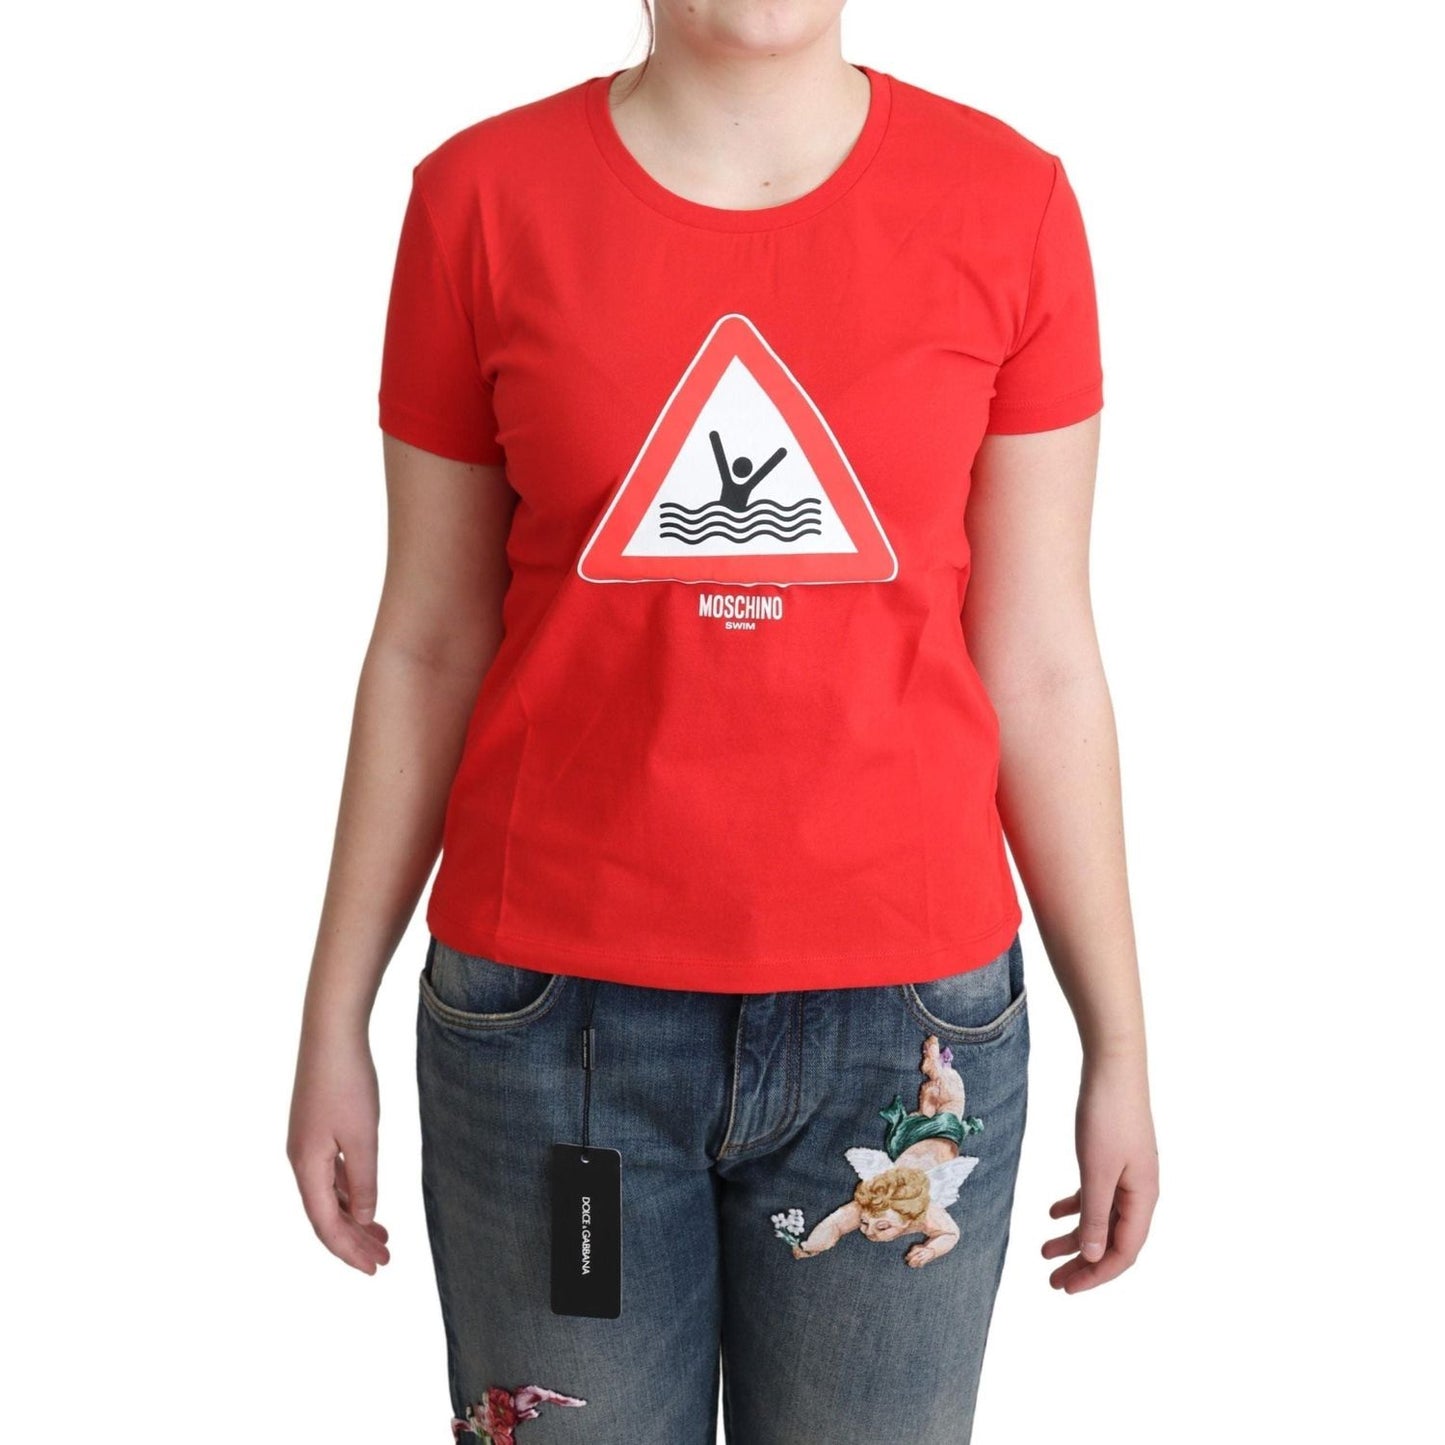 Moschino Chic Red Graphic Cotton Tee red-cotton-swim-graphic-triangle-print-t-shirt IMG_0857-1-scaled-e5aa9ed9-2b7.jpg